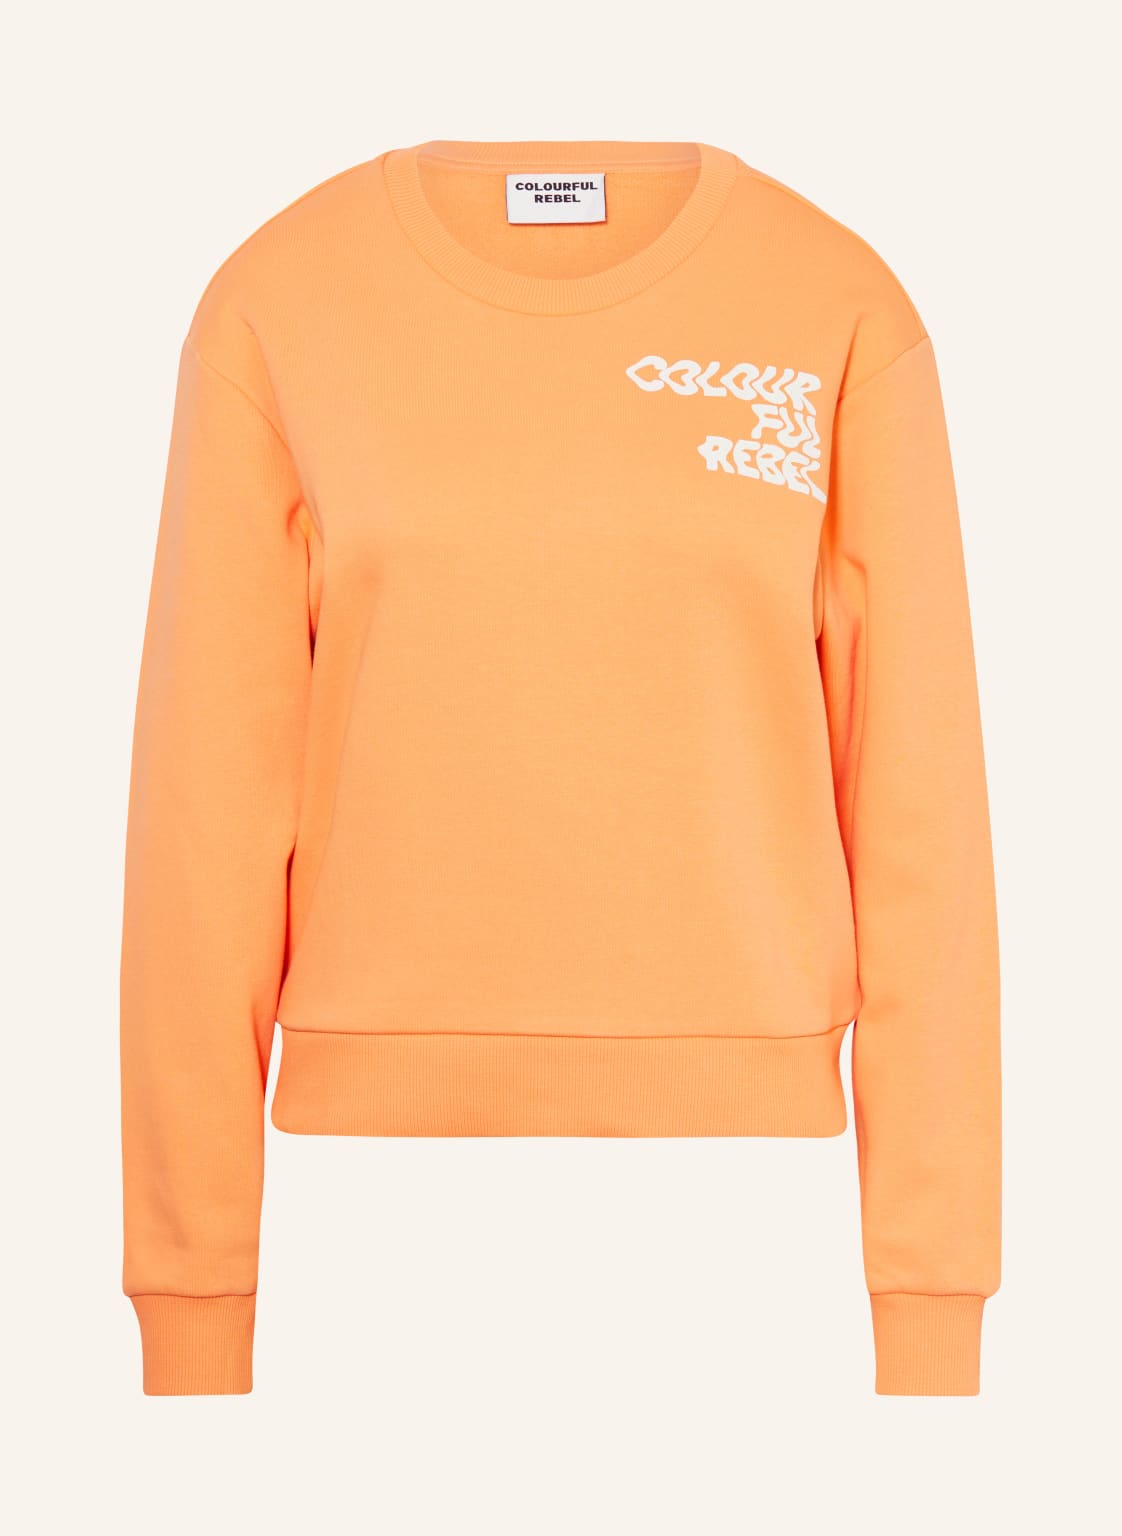 Colourful Rebel Sweatshirt Logo Wave orange von COLOURFUL REBEL